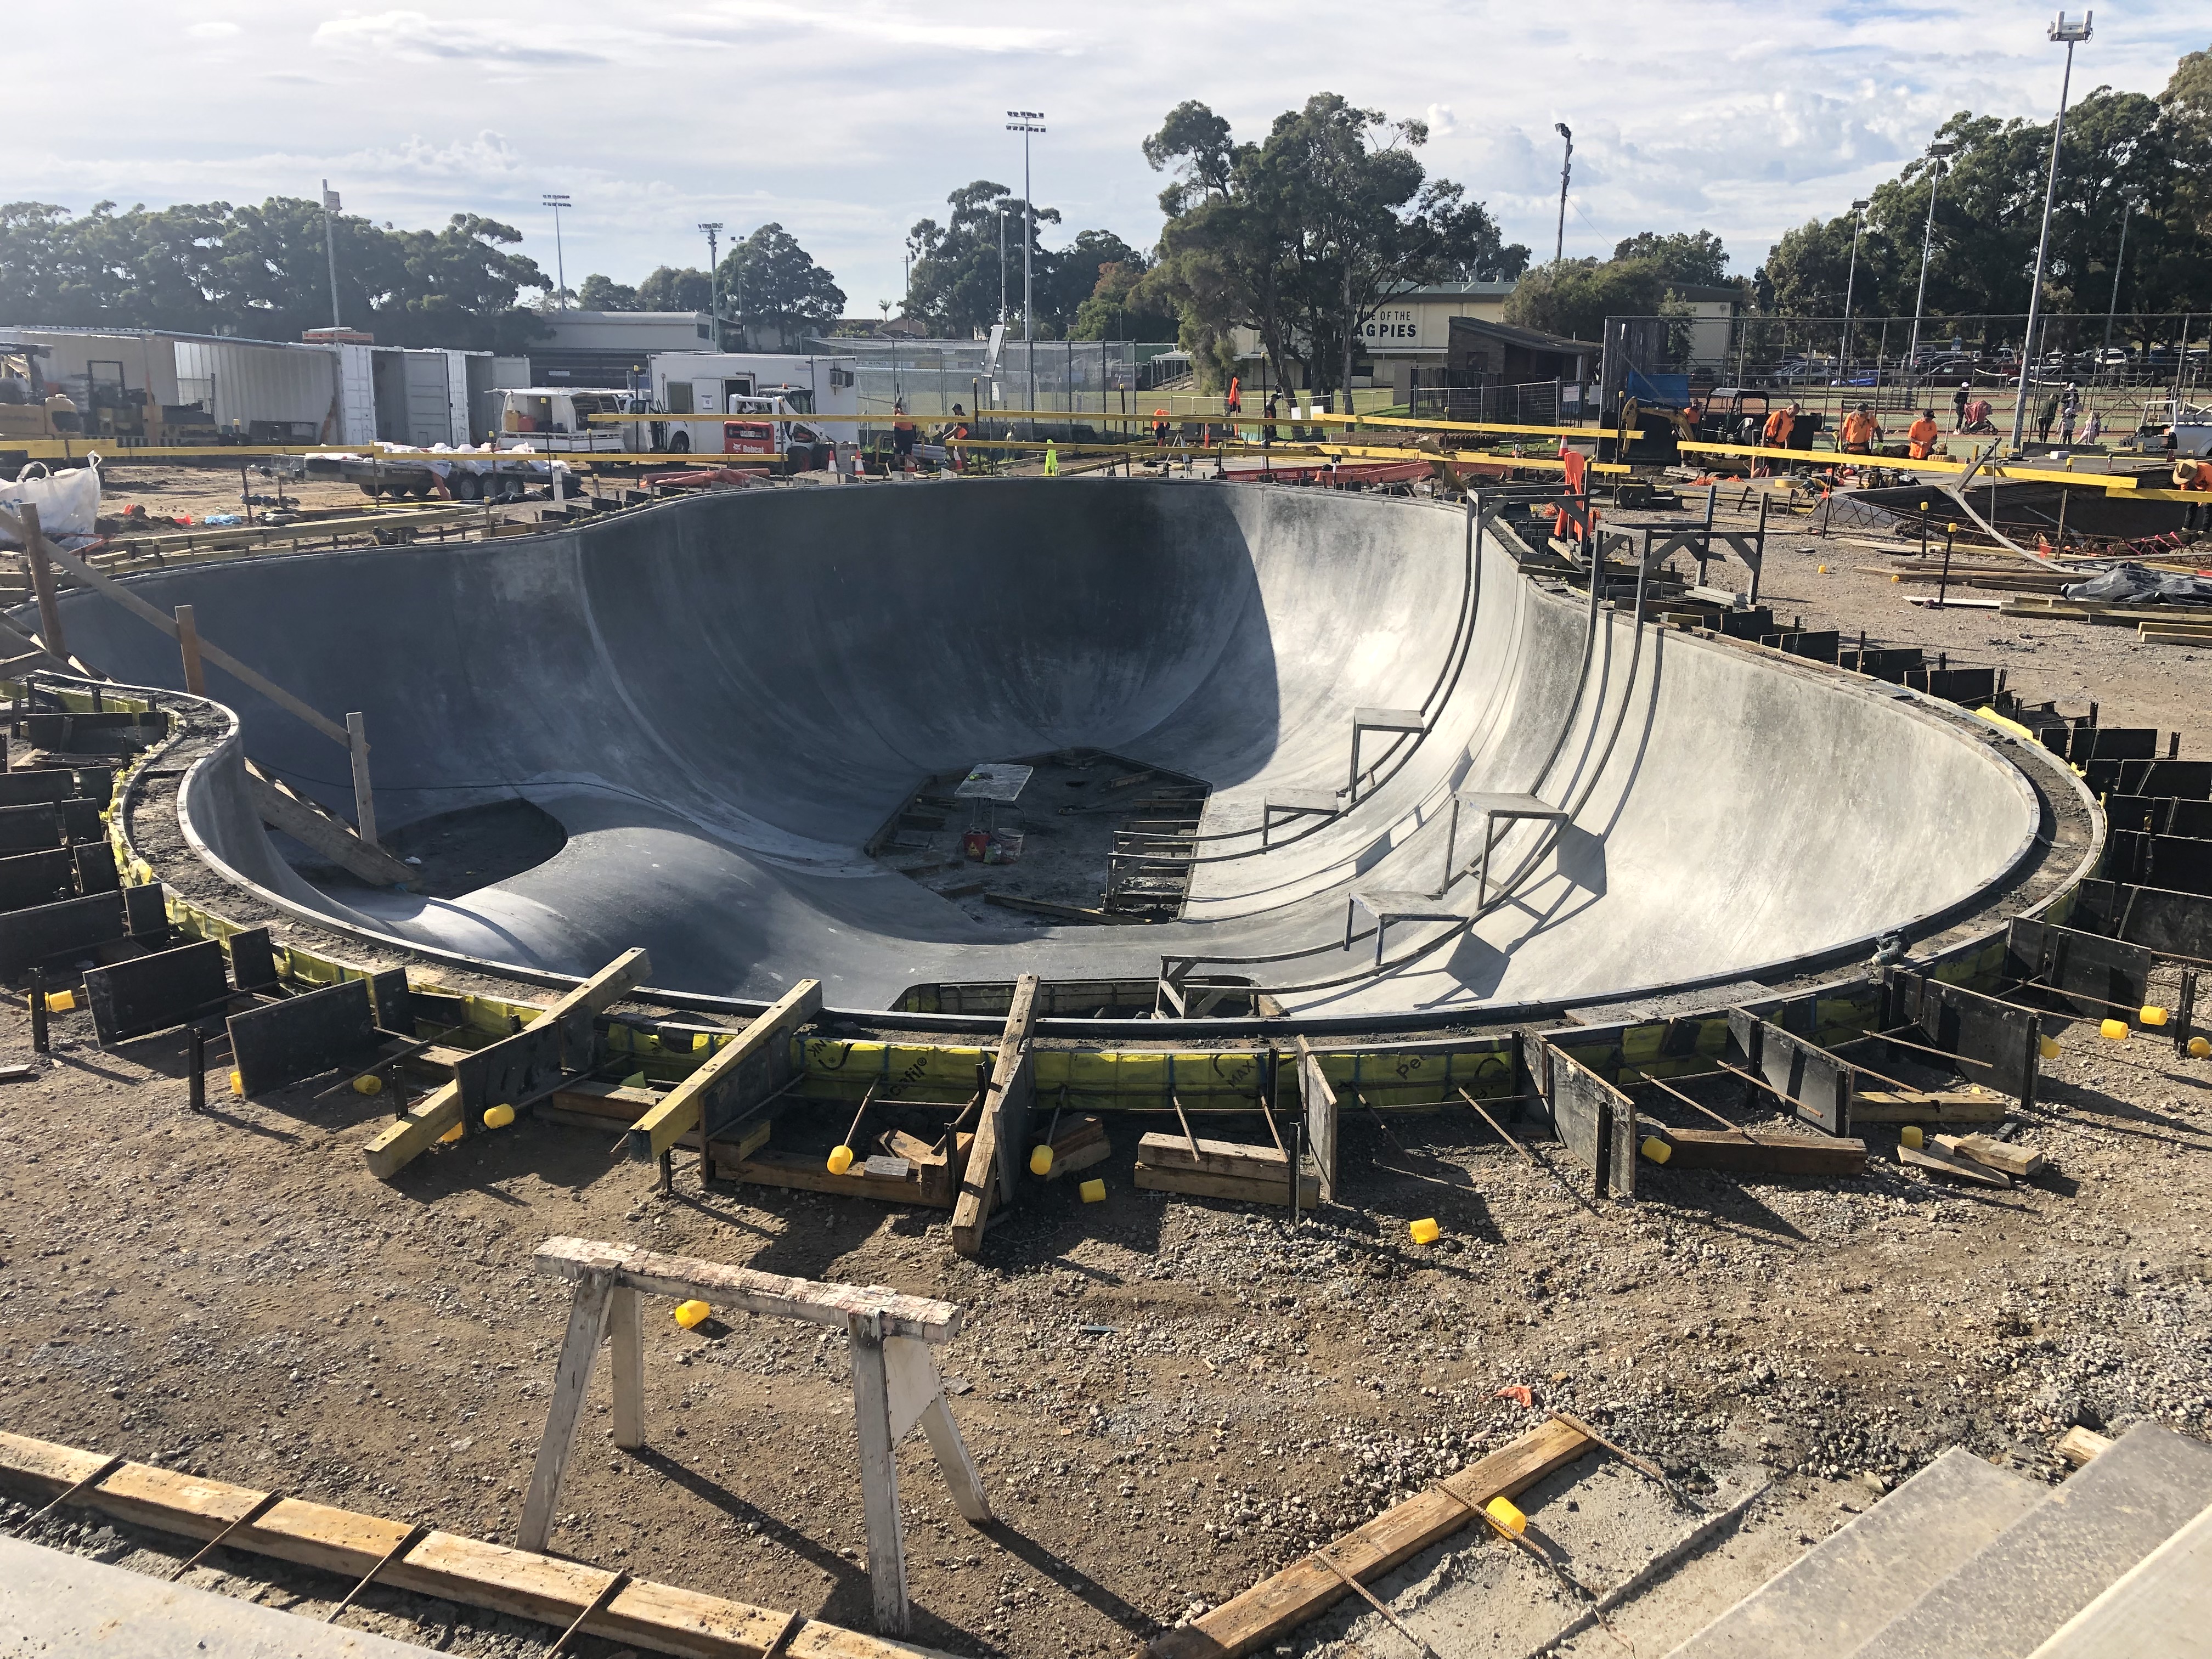 Skate bowl - new concrete shaping